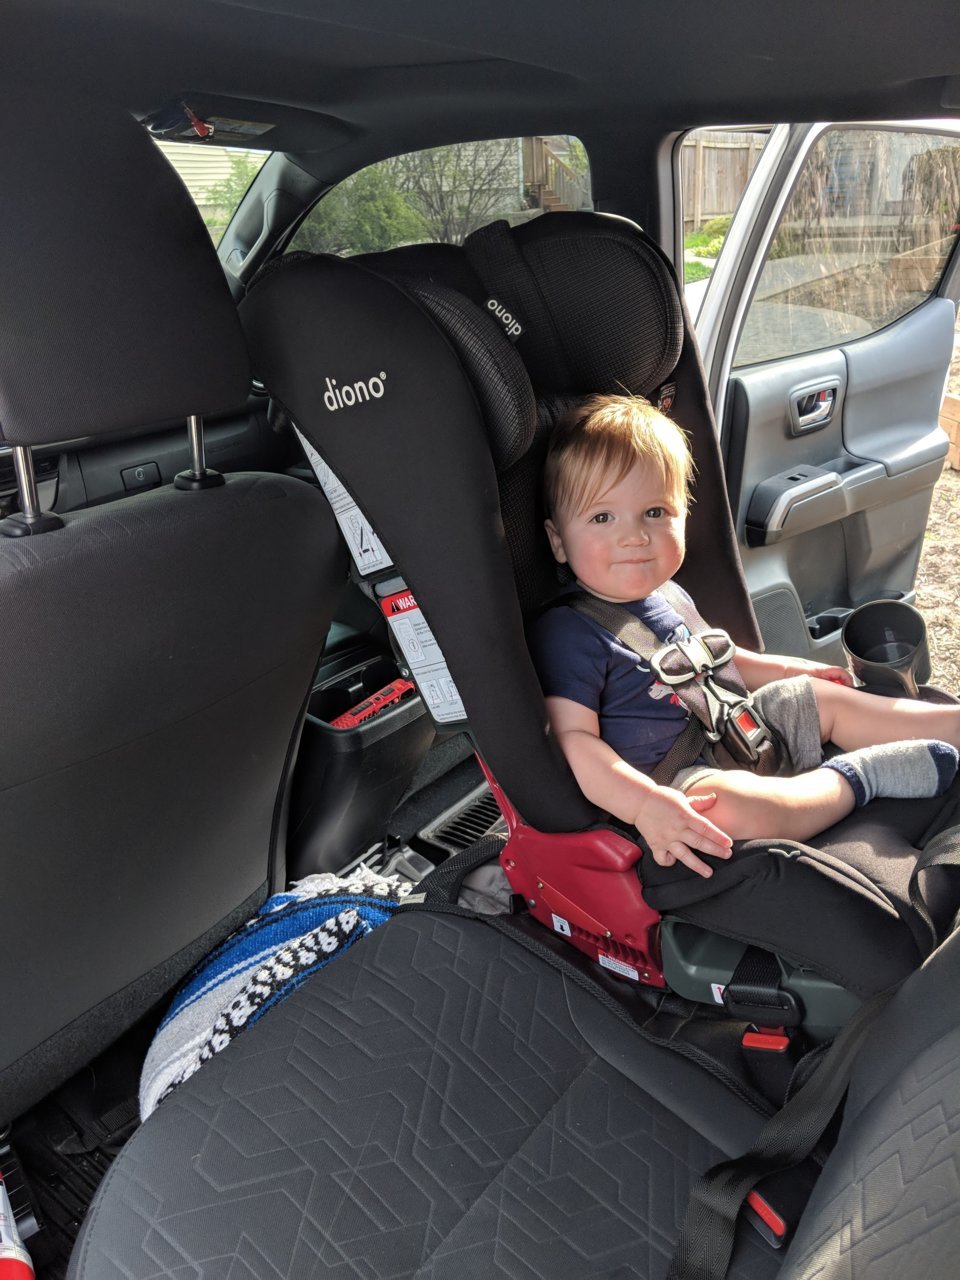 diono car seat rear facing weight limit